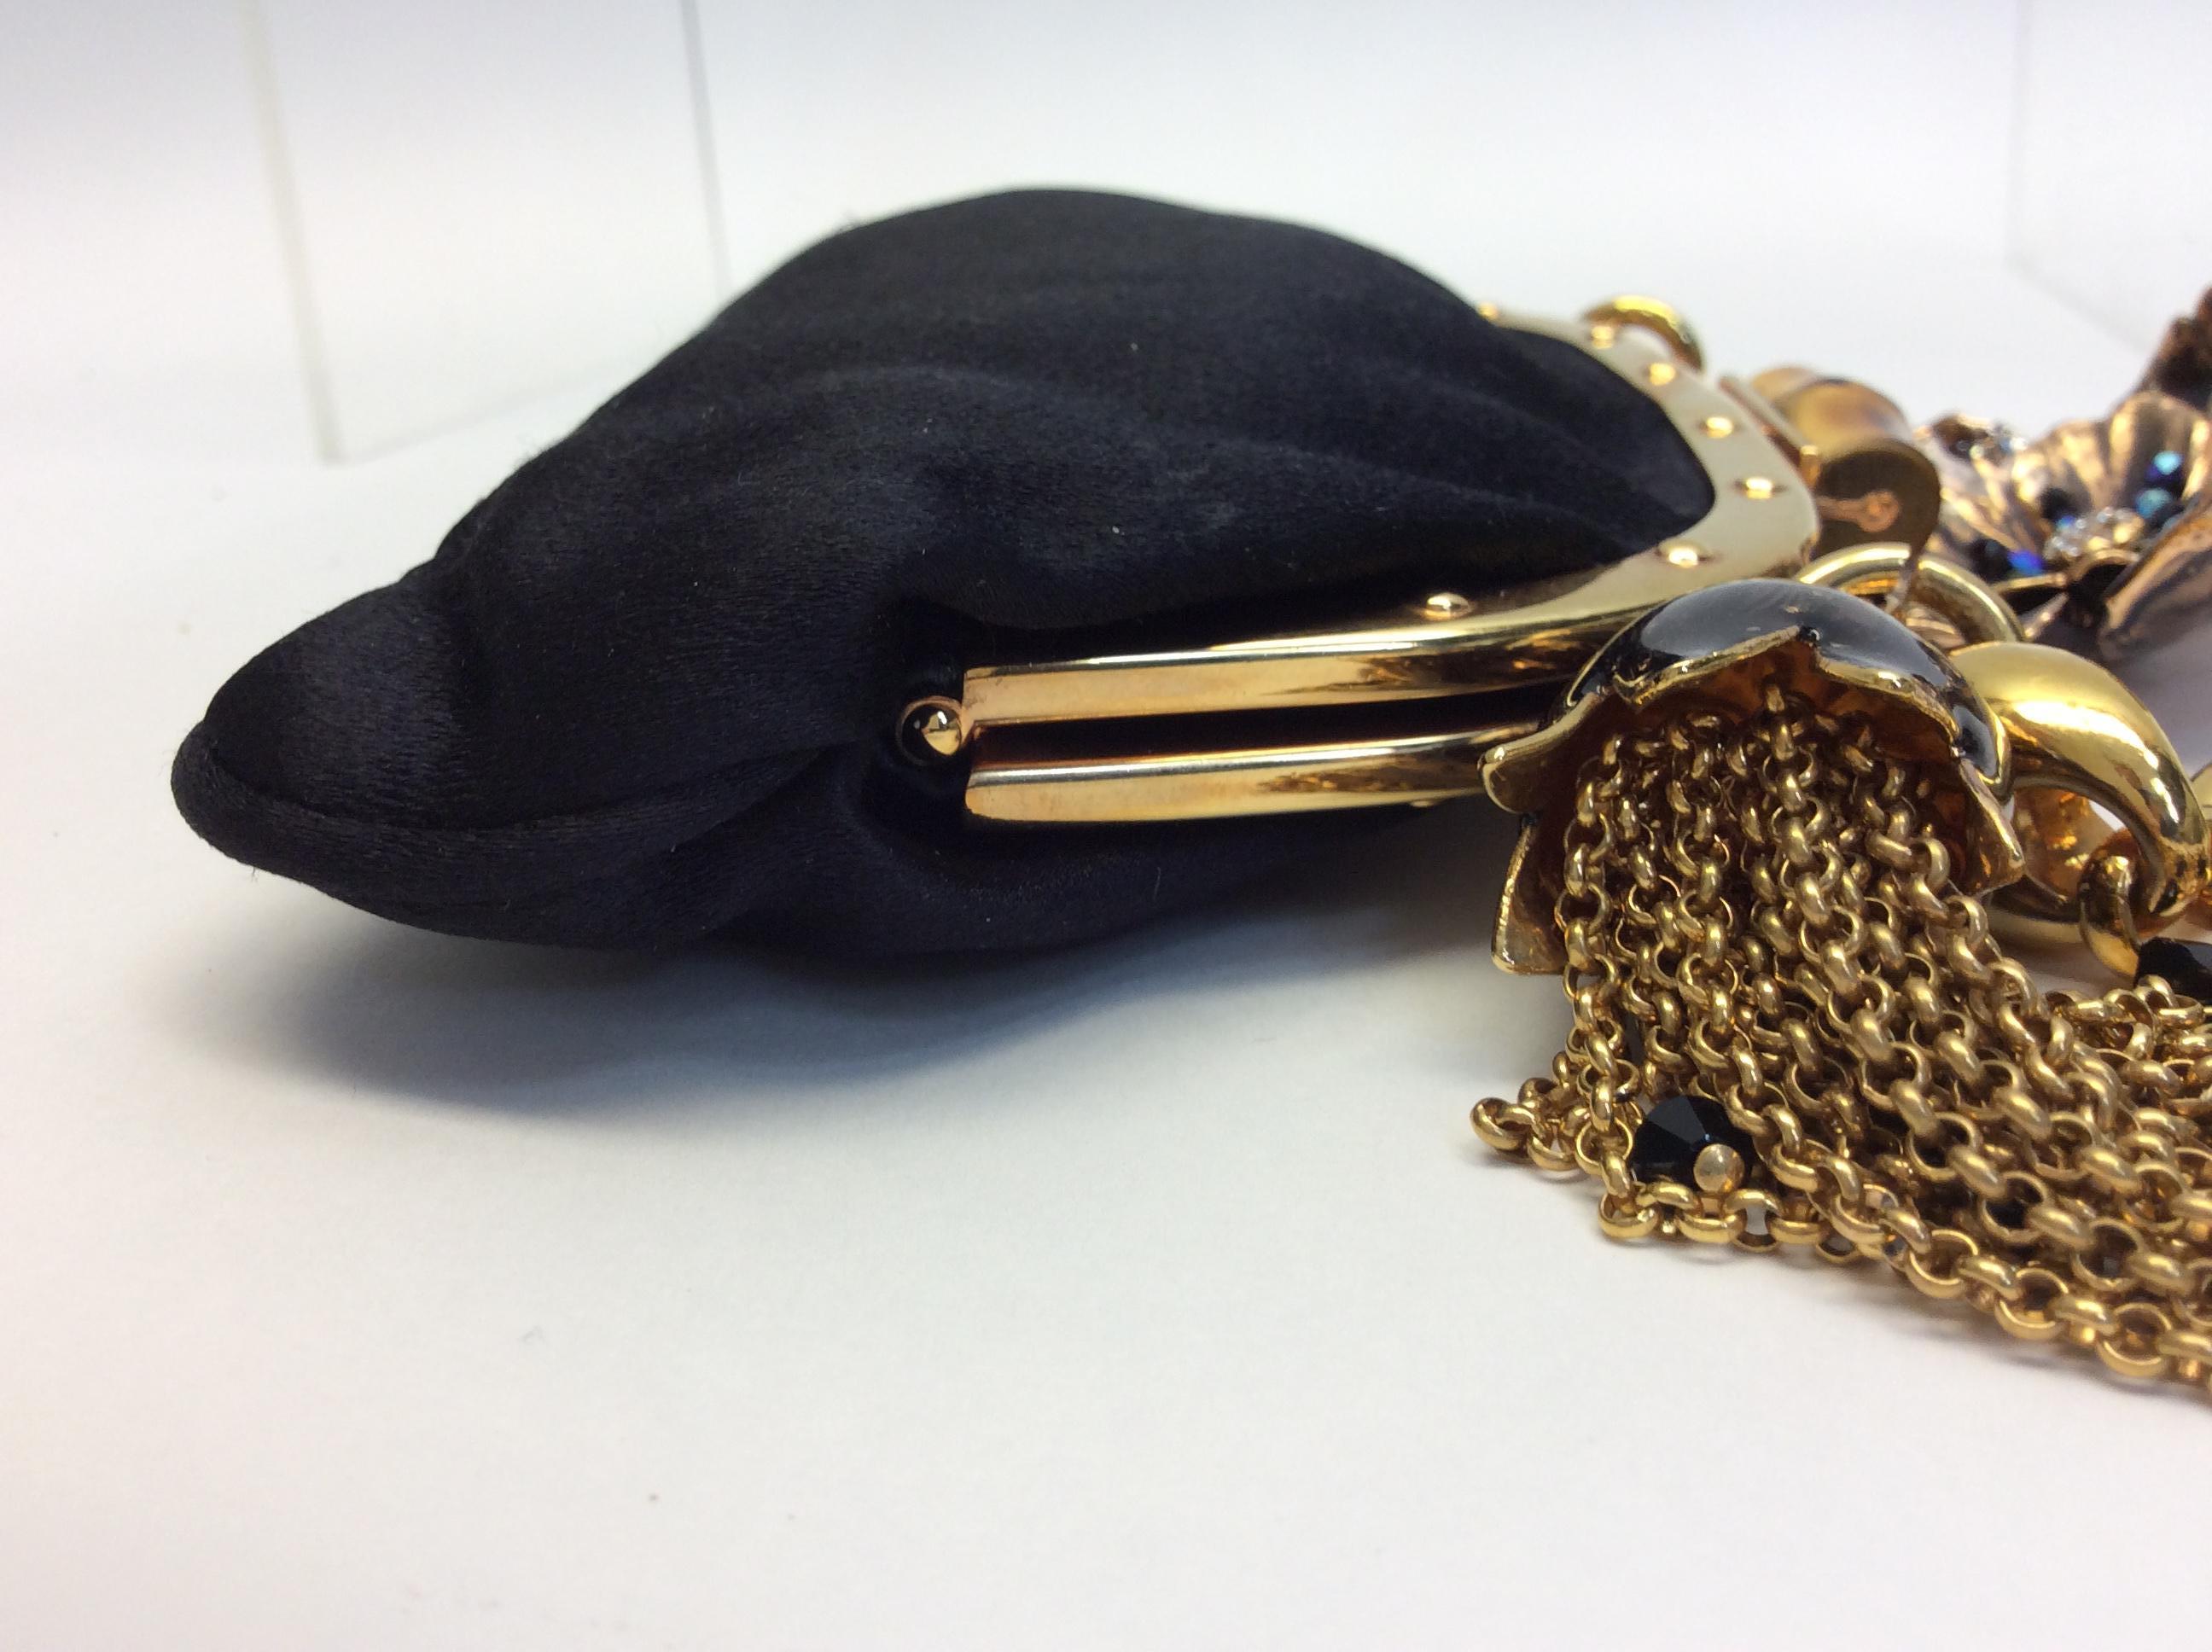 Gucci Small Black Satin Bloom Handbag
$550
Made in Italy
Satin
5.75